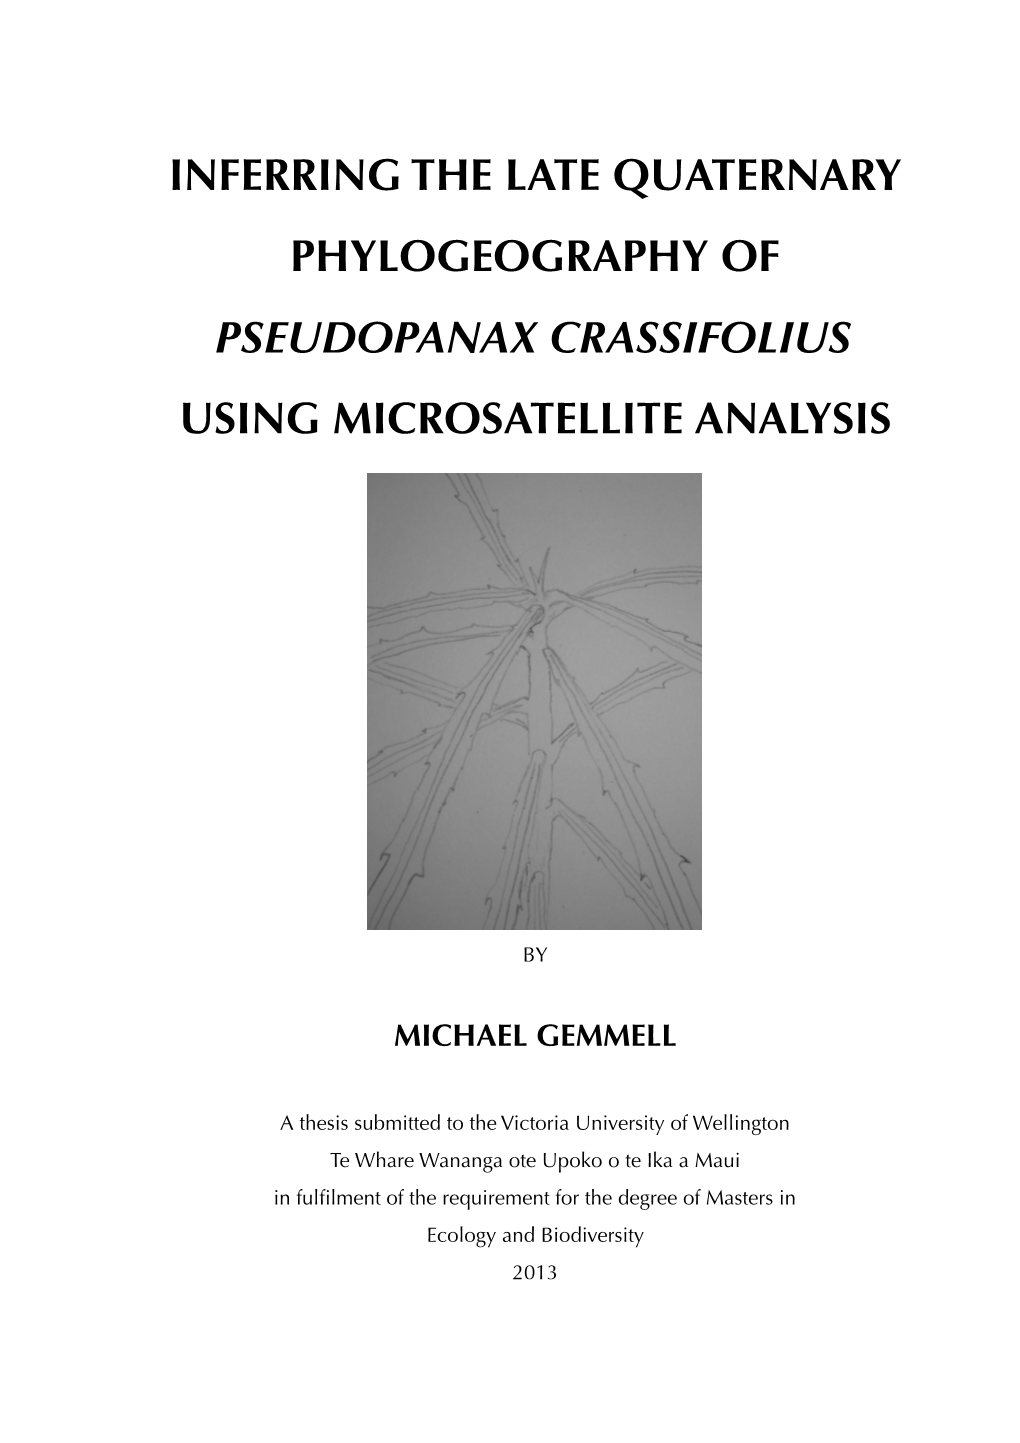 Inferring the Late Quaternary Phylogeography of Pseudopanax Crassifolius Using Microsatellite Analysis